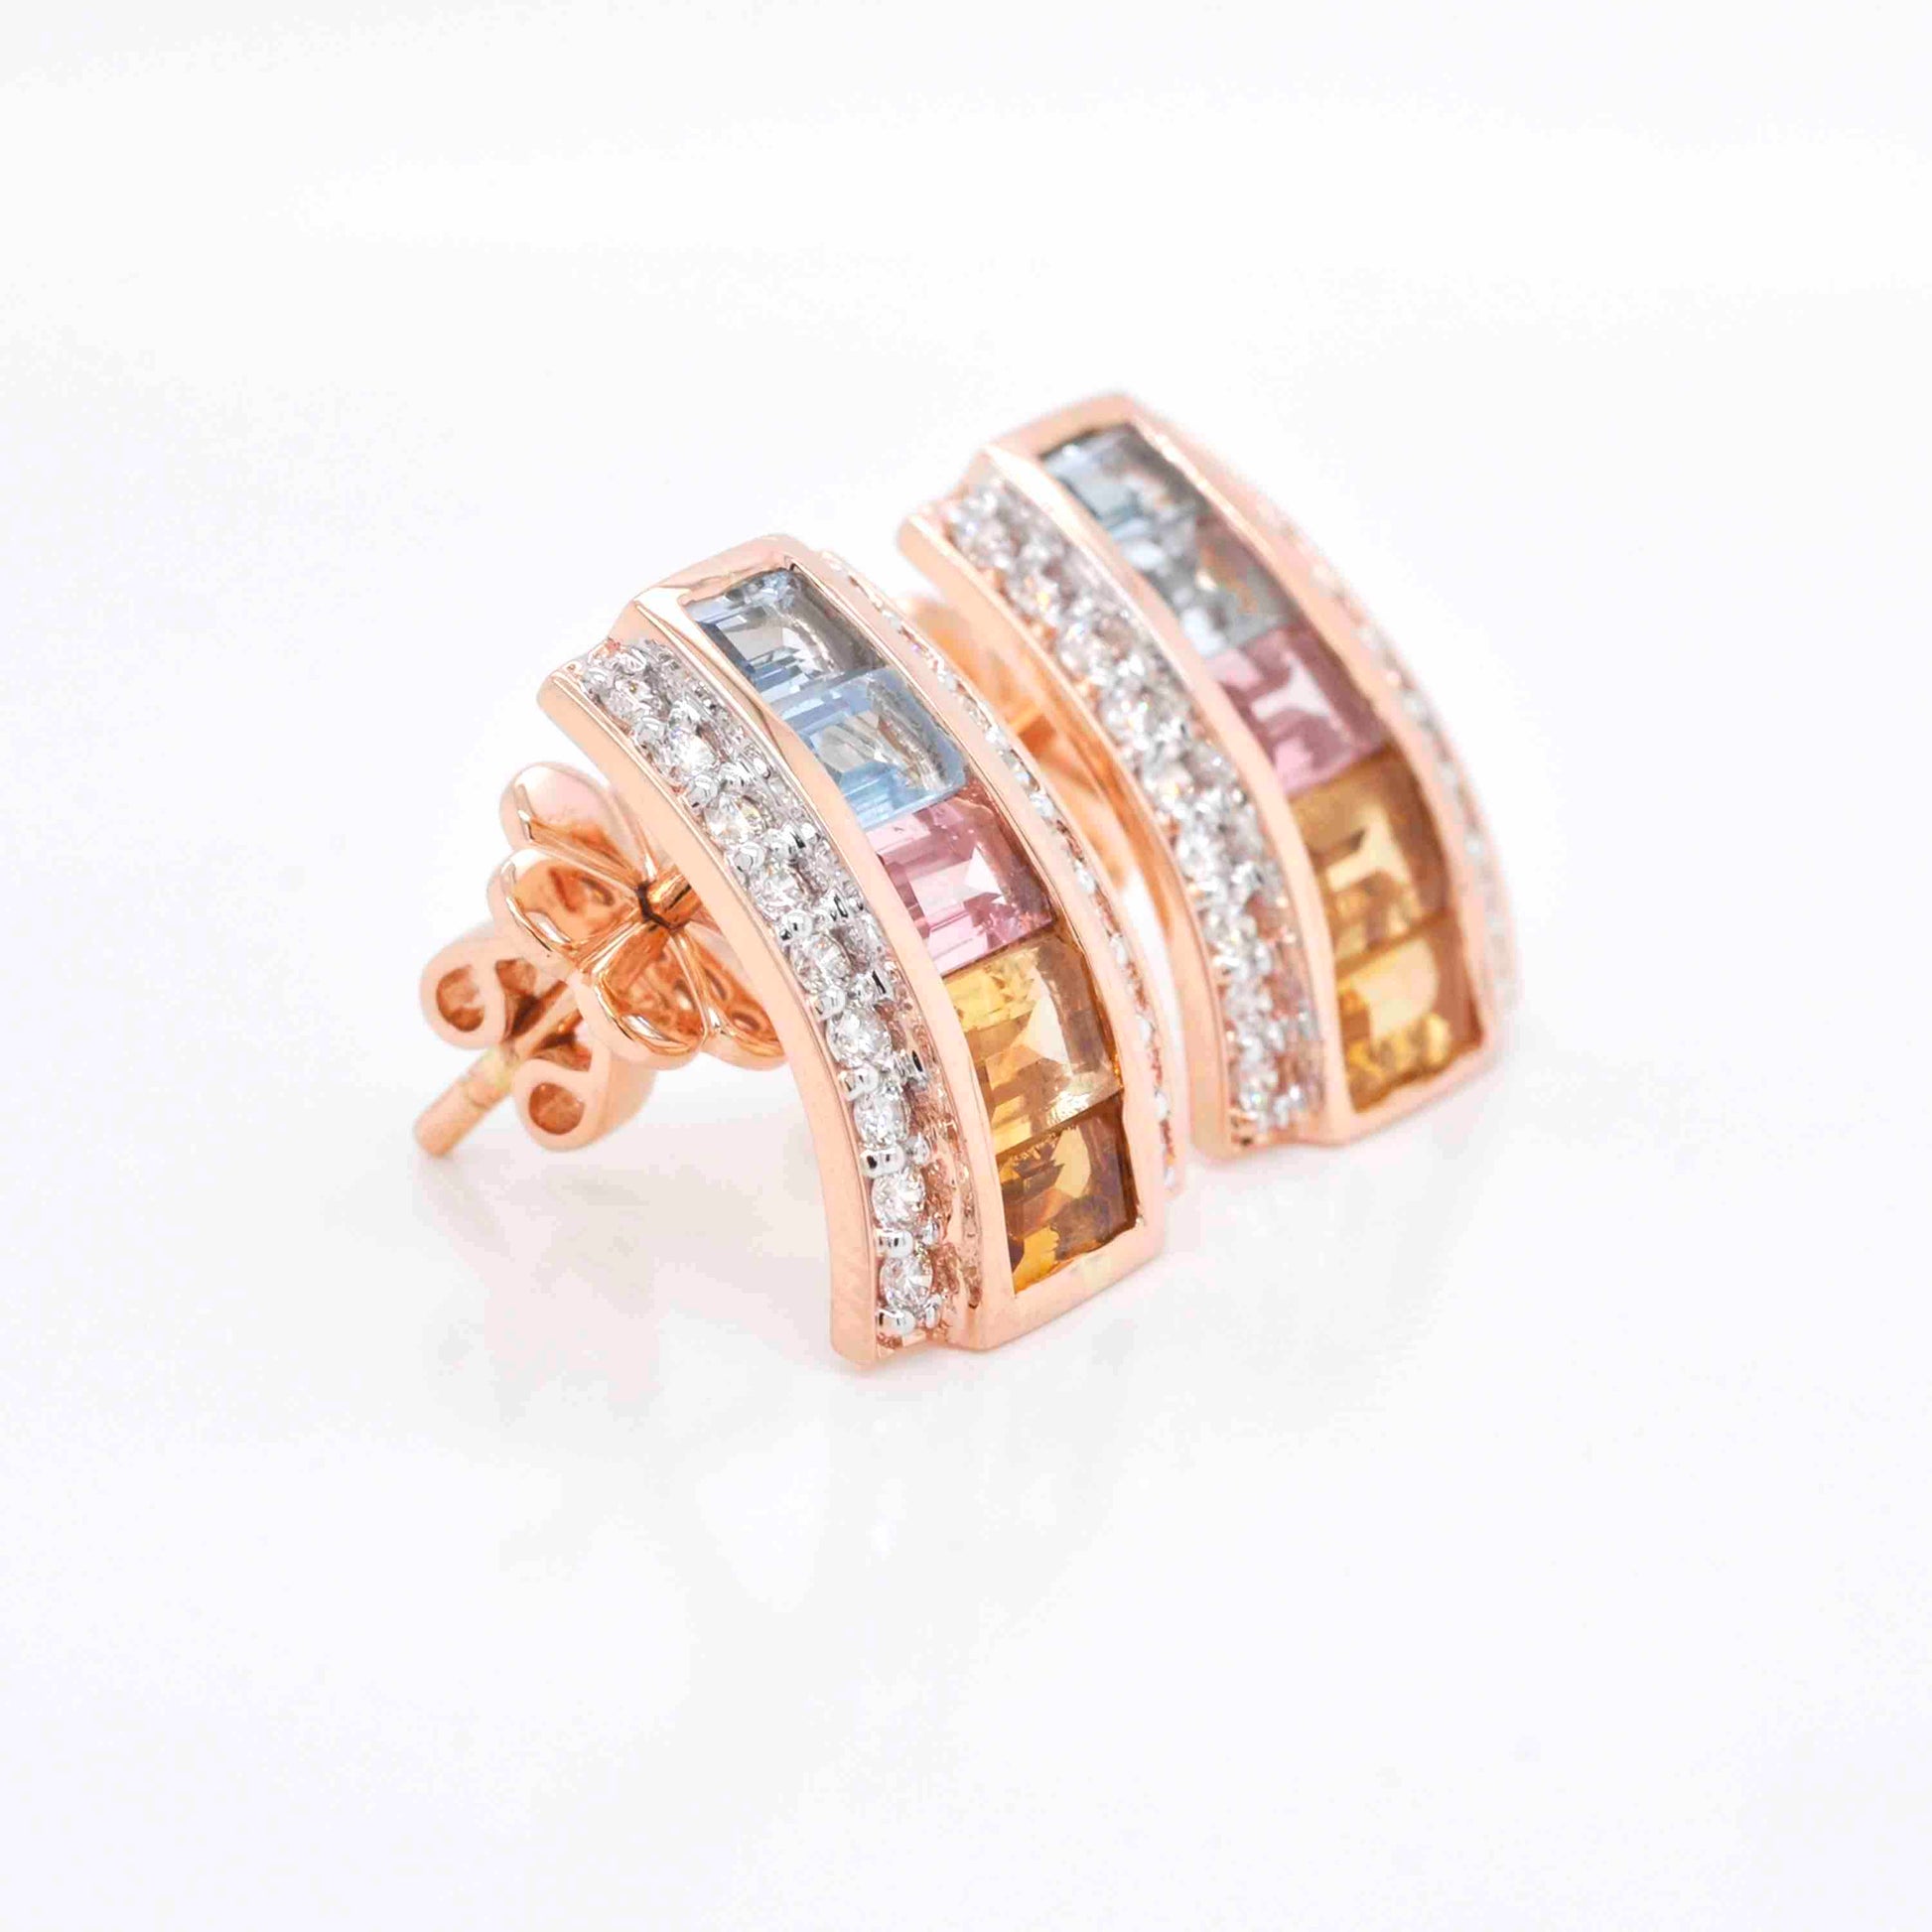 18K Gold Pyramid Rainbow Gemstones Diamond Stud Earrings - Vaibhav Dhadda Jewelry